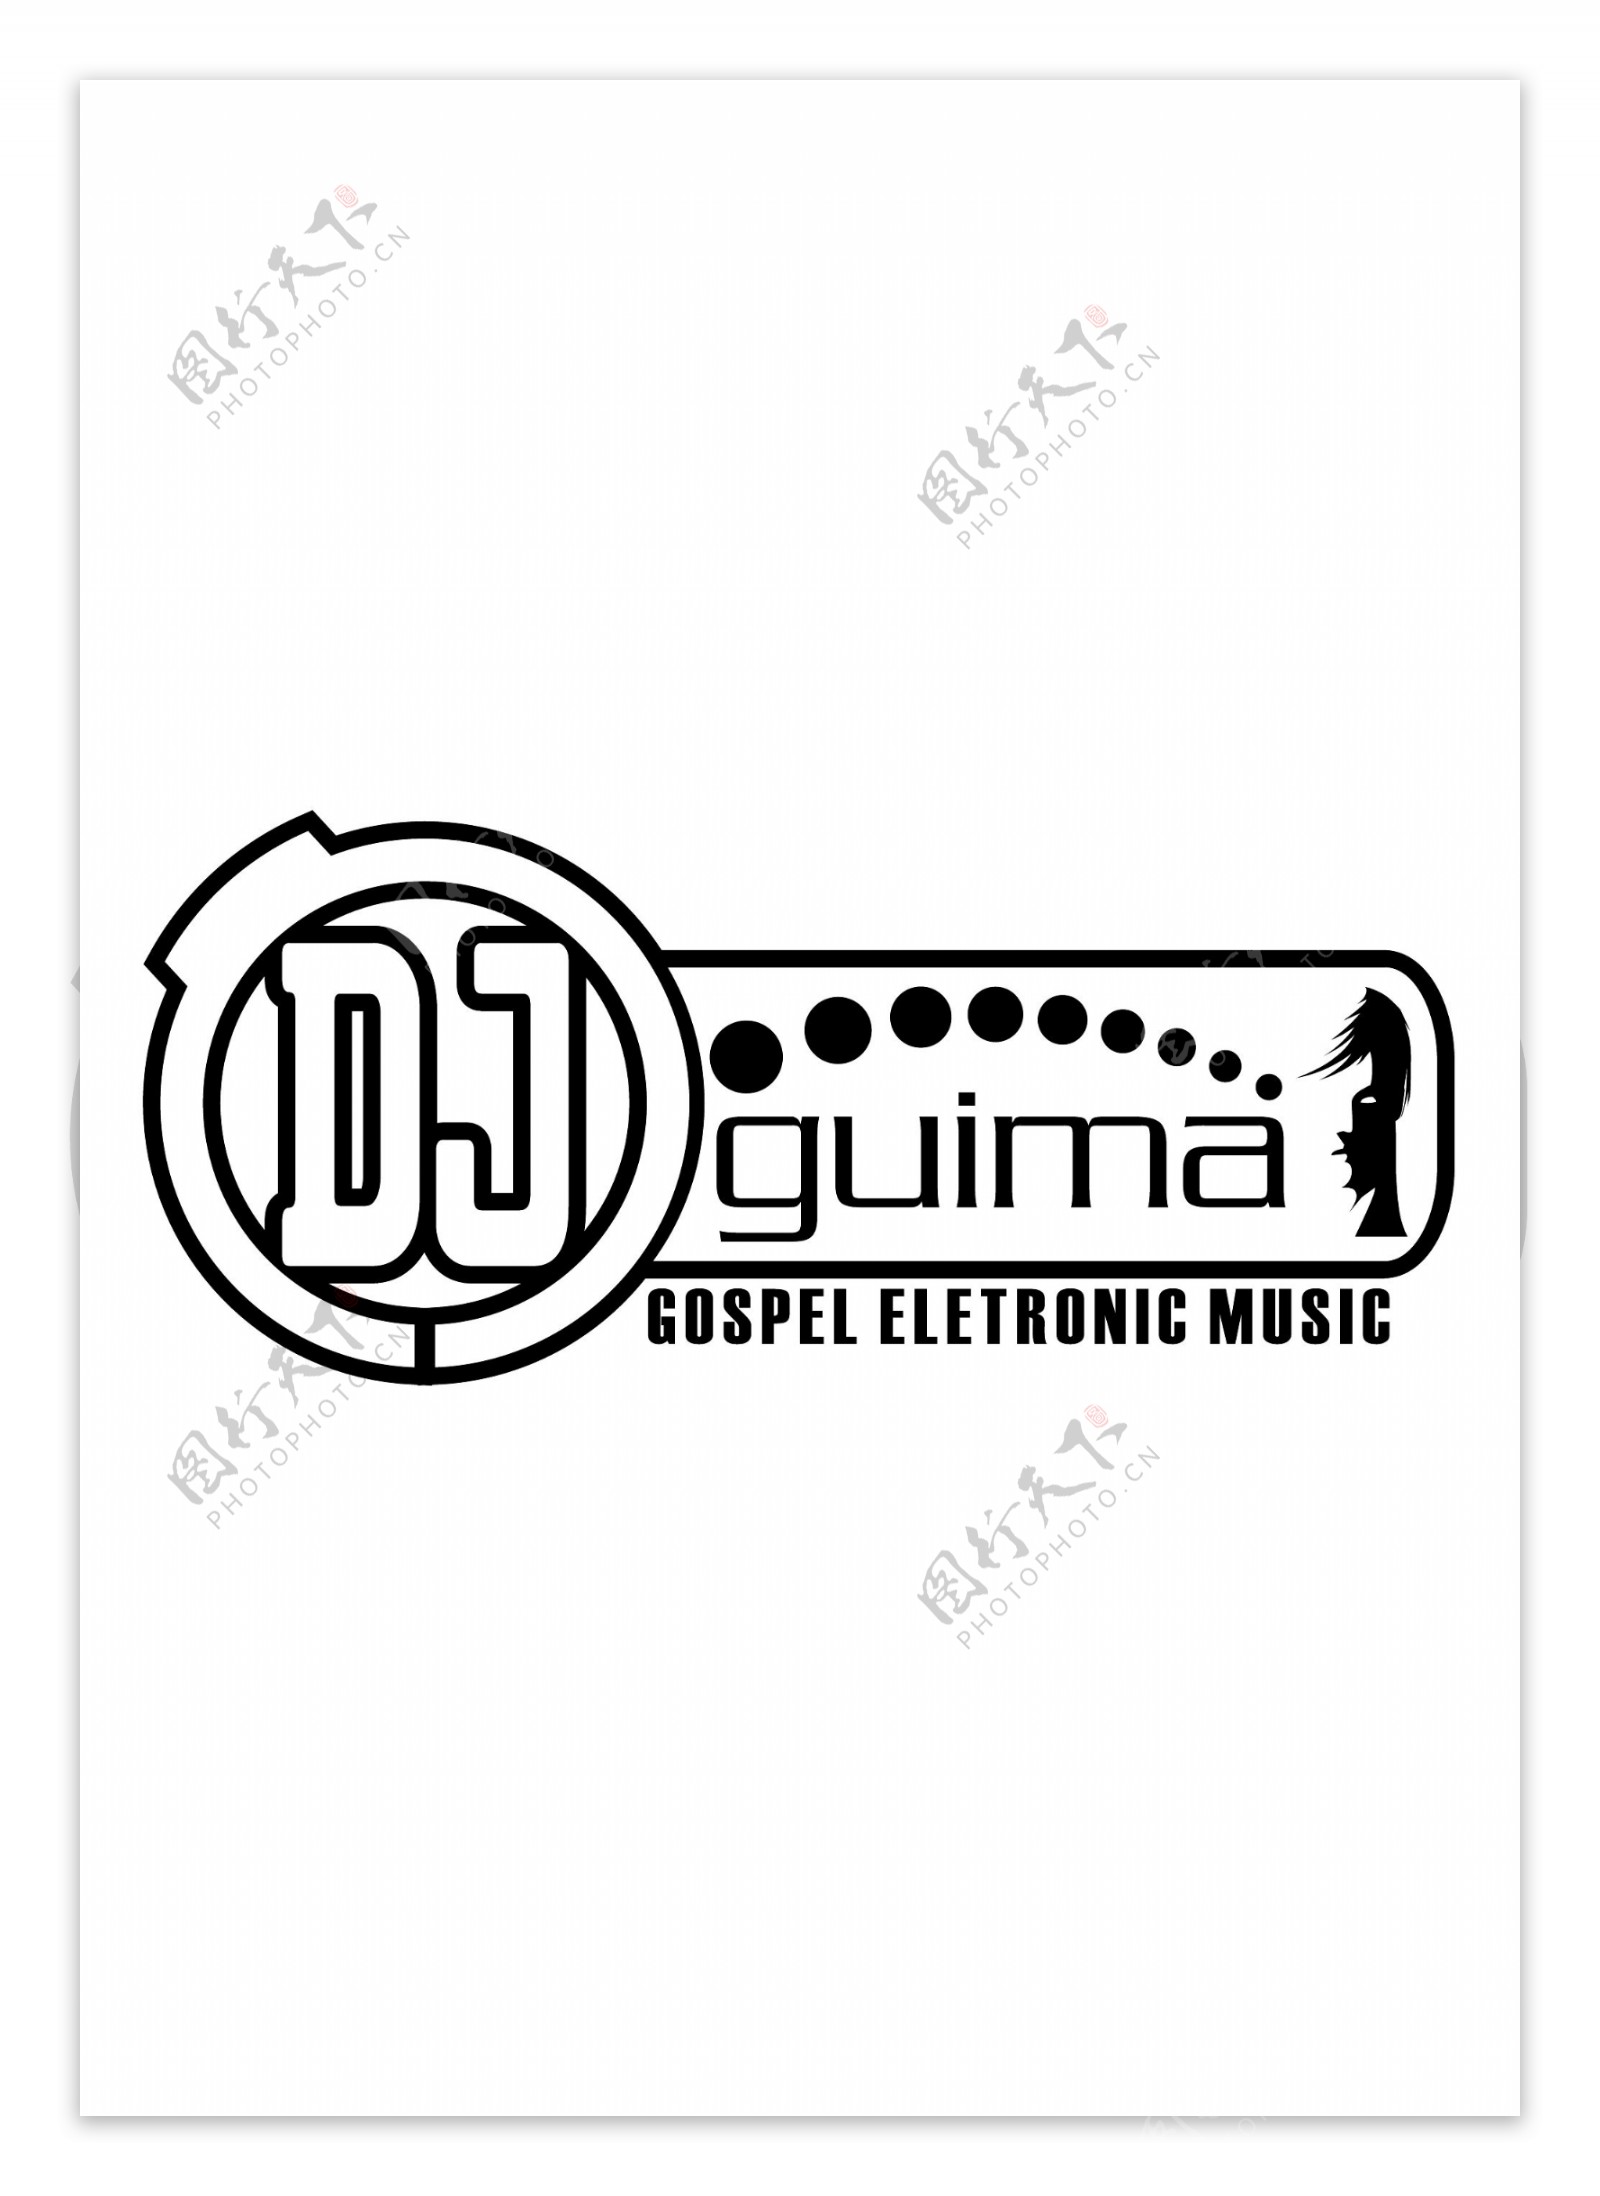 DJGuima2logo设计欣赏DJGuima2摇滚乐队标志下载标志设计欣赏